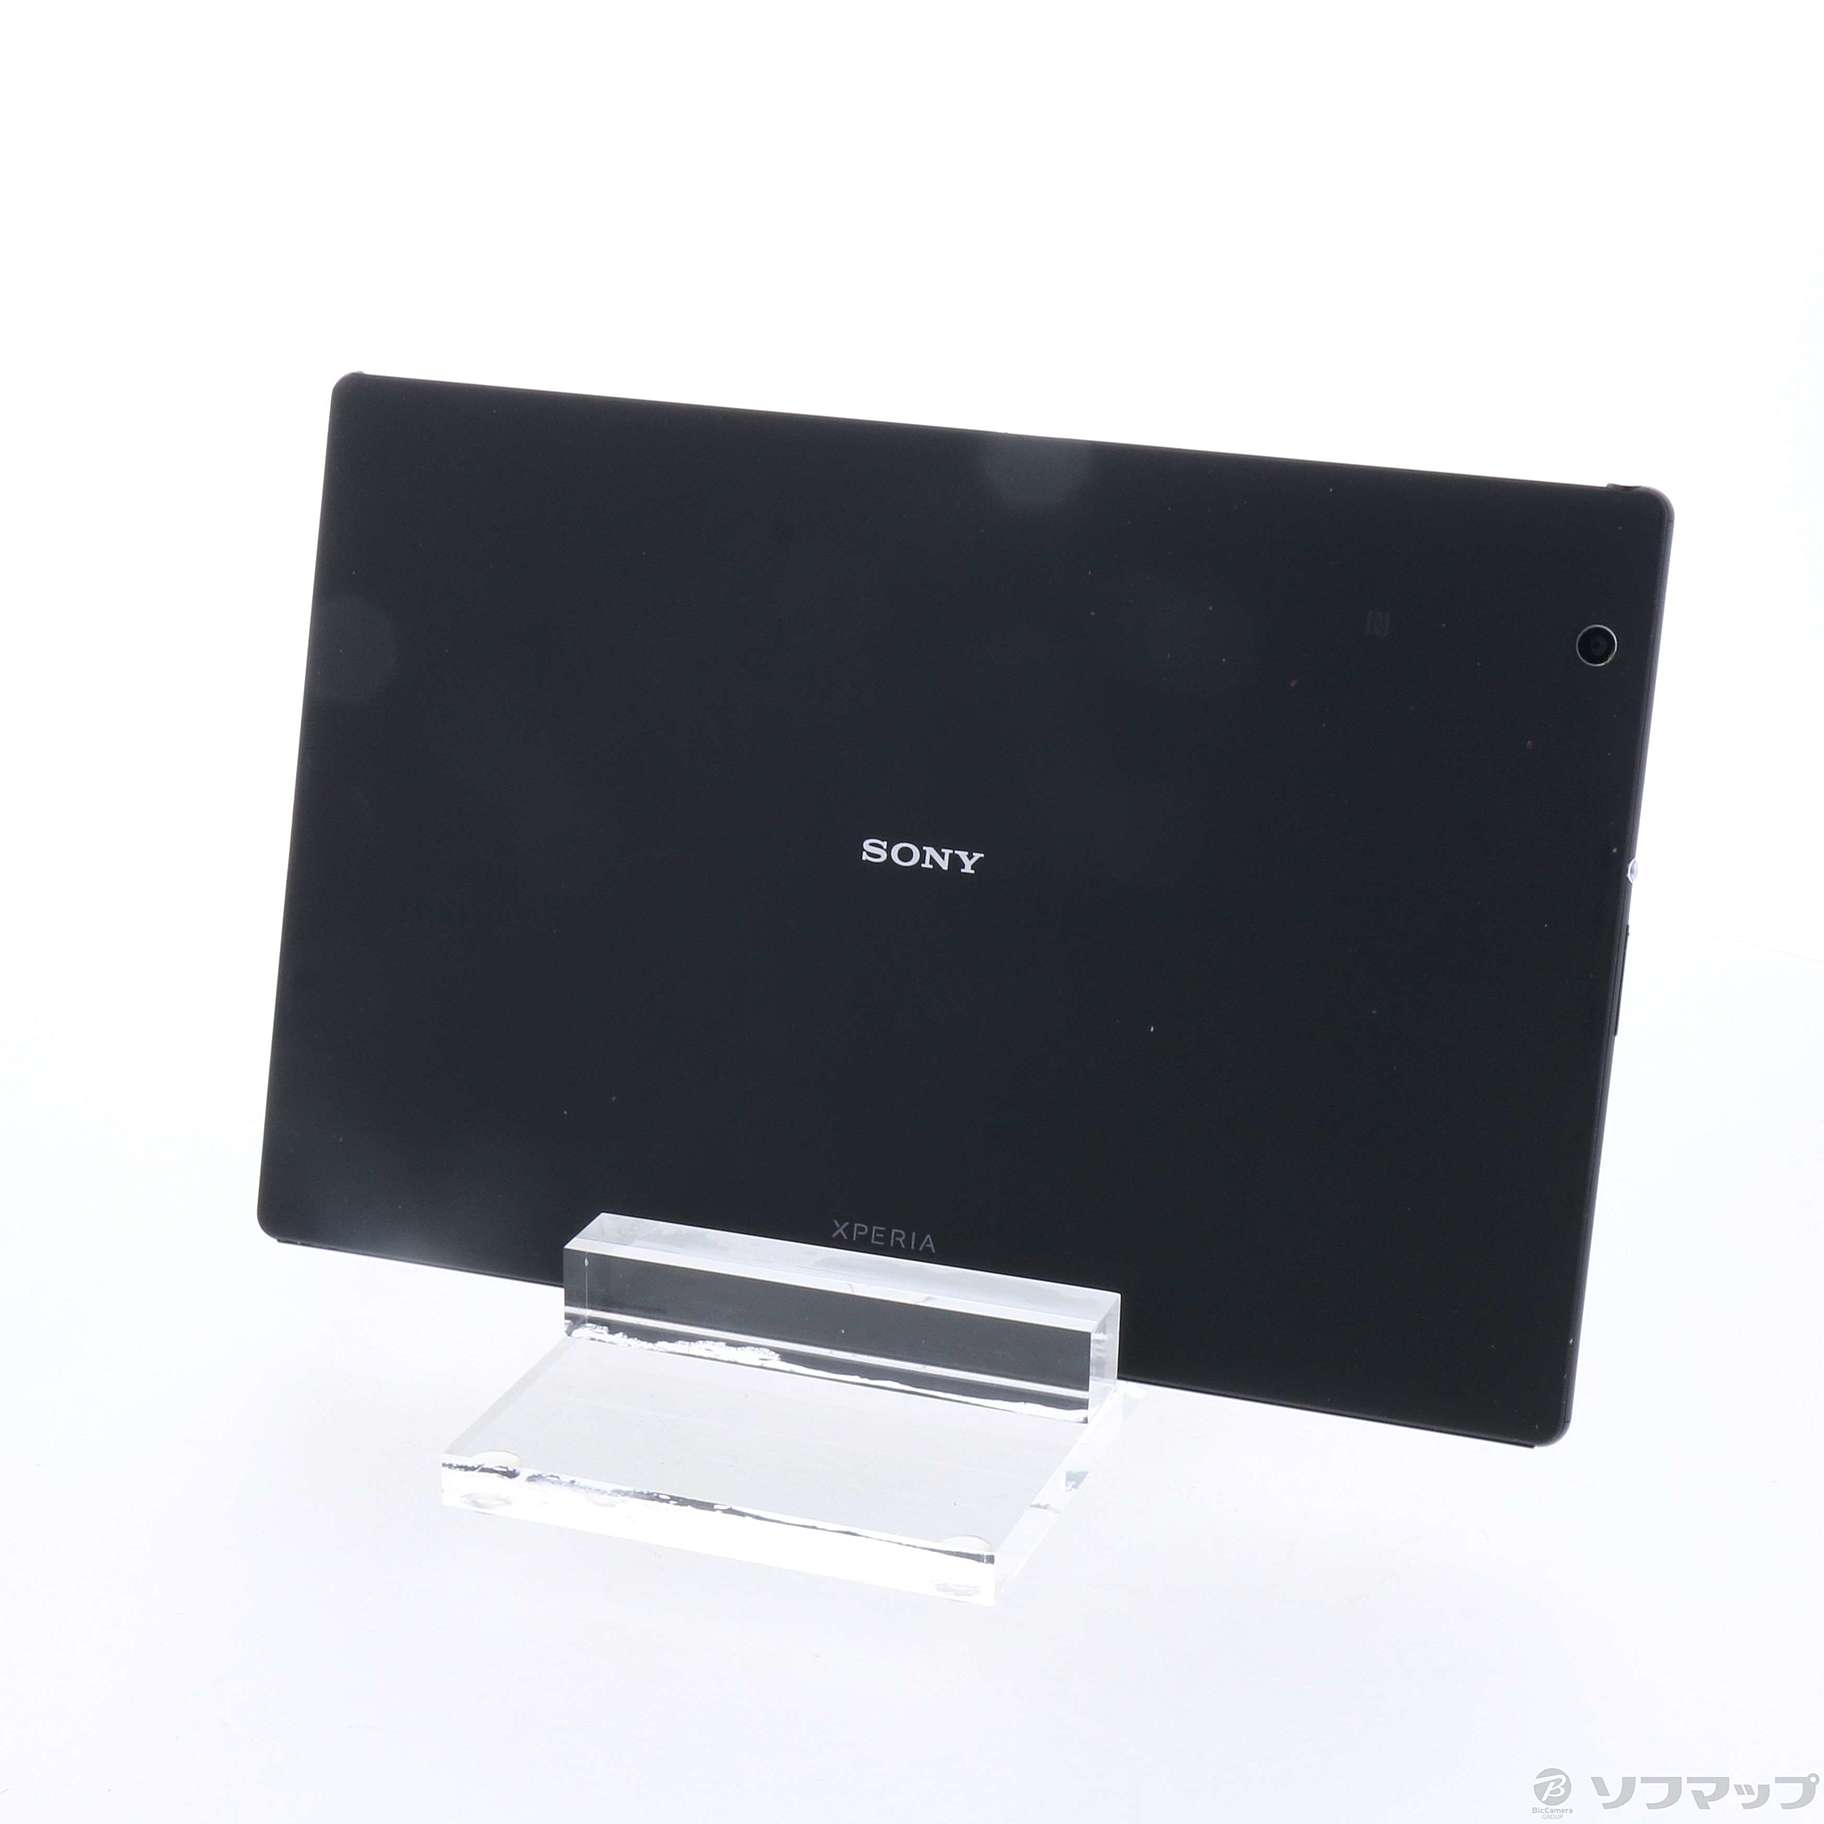 SGP712JP/B Xperia Z4 Tablet ストレージ32GB ブラック-